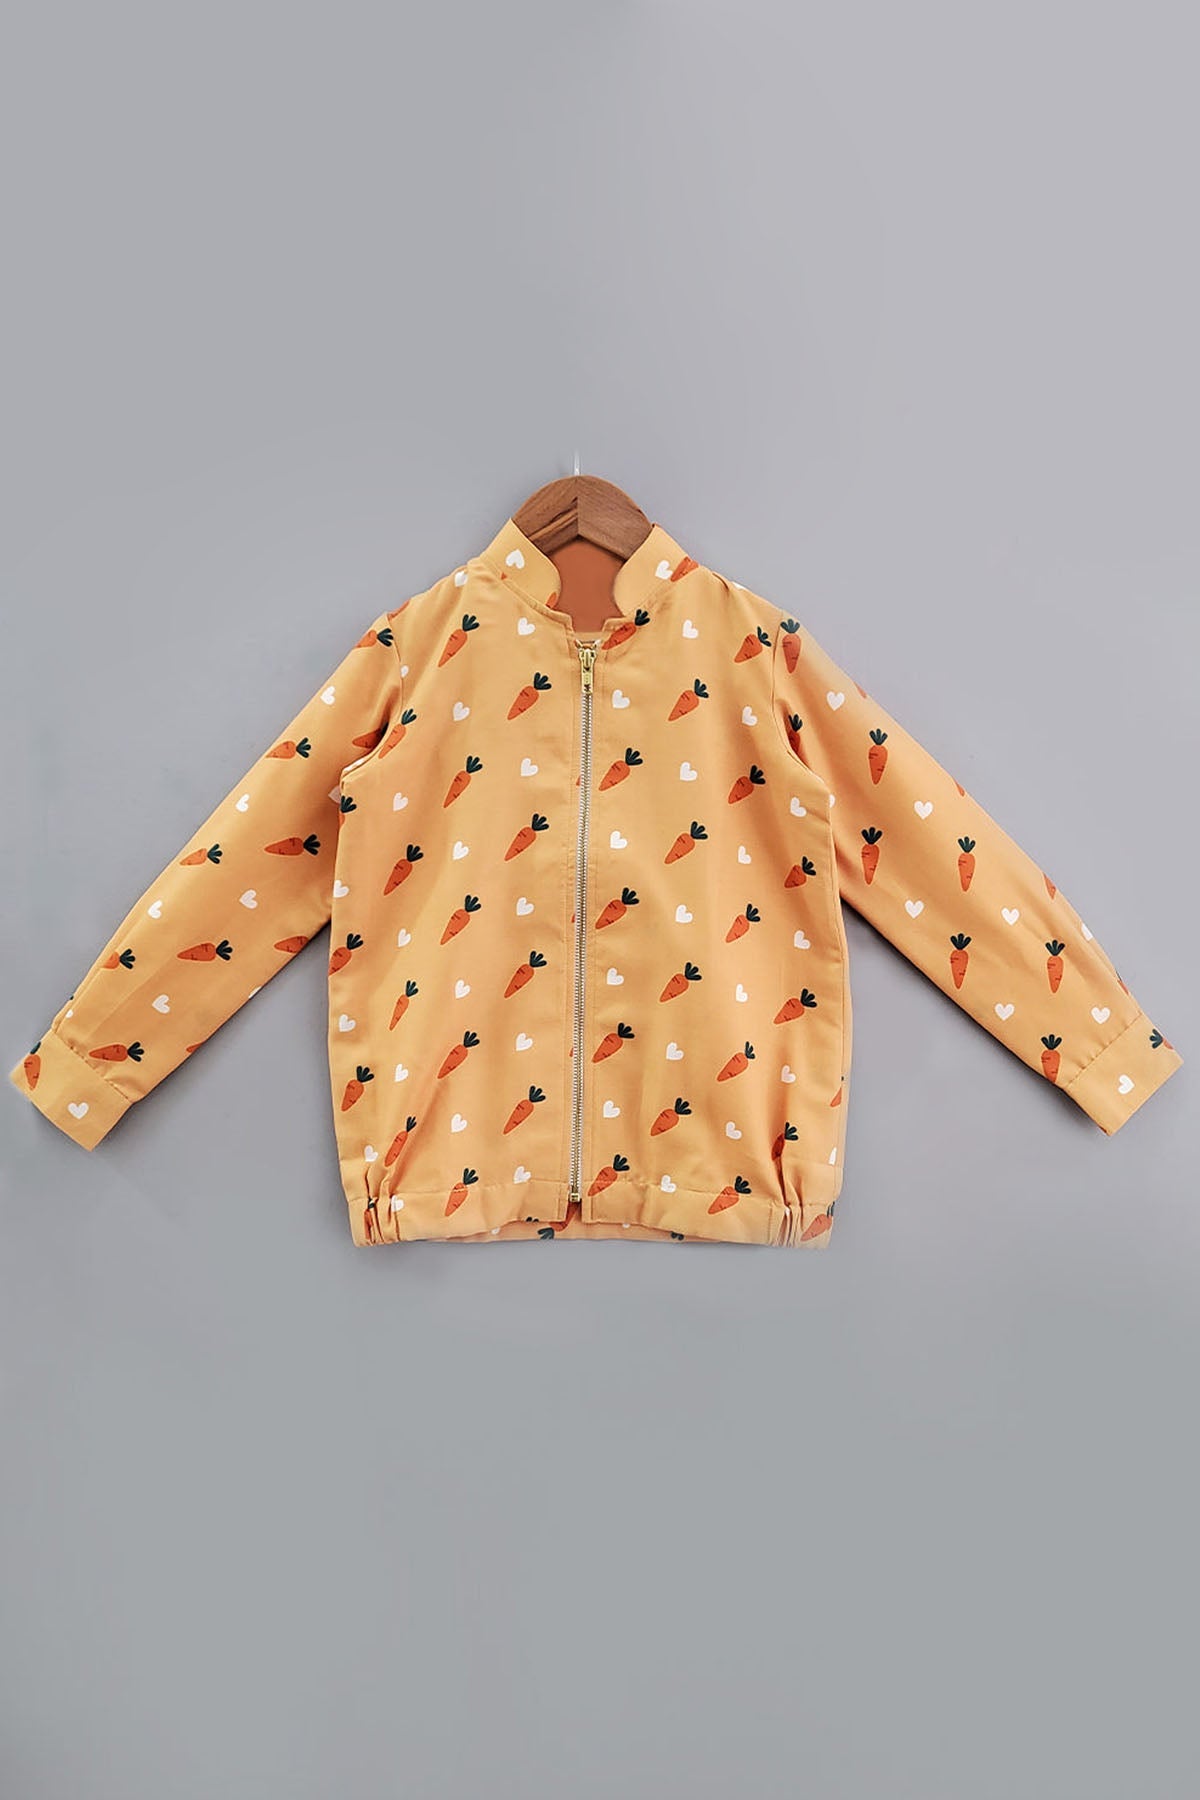 Designer Little Brats Carrot Printed Bomber Jacket For Kids Available online at ScrollnShops